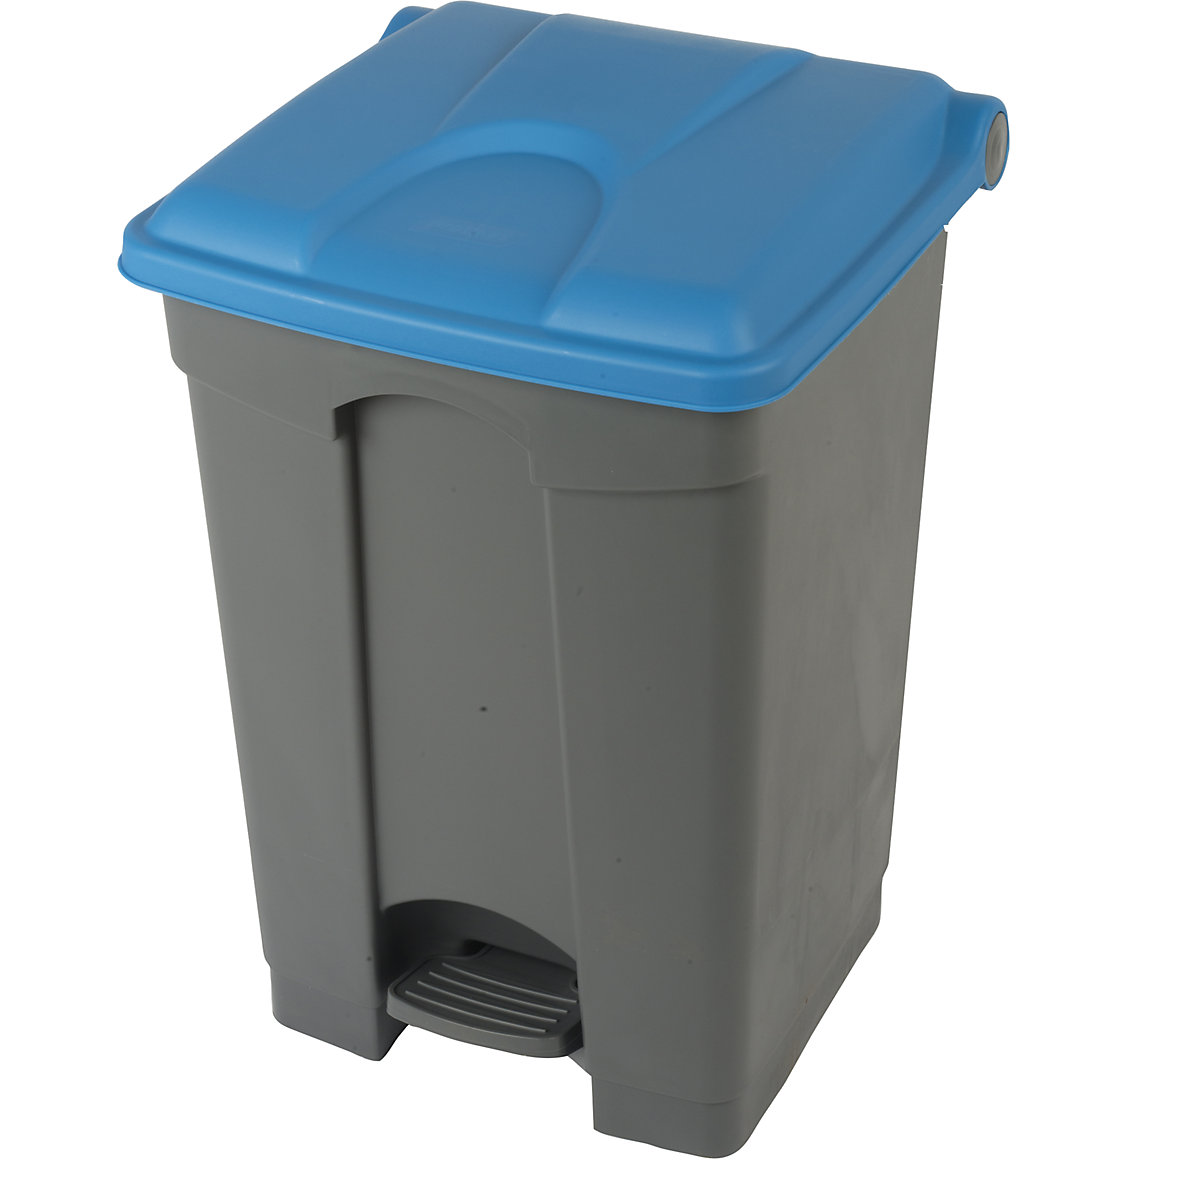 EUROKRAFTbasic – Pedal waste collector, capacity 45 l, WxHxD 410 x 600 x 400 mm, grey, blue lid